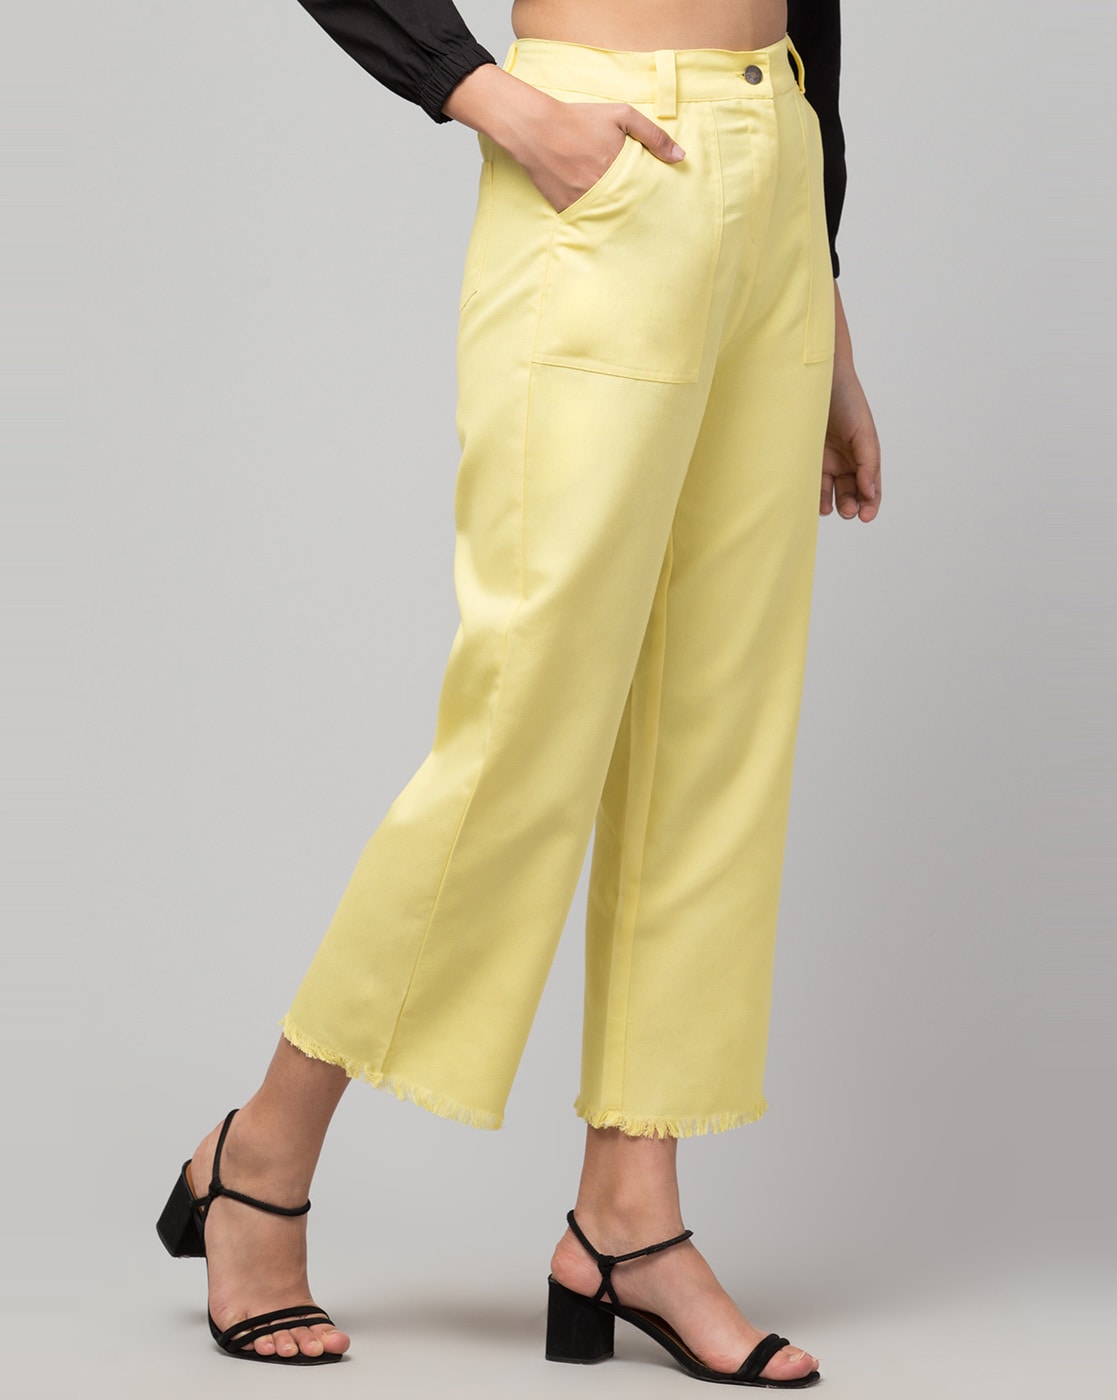 Zara Slim Fit Men Yellow Trousers  Buy Light Yellow Zara Slim Fit Men Yellow  Trousers Online at Best Prices in India  Flipkartcom